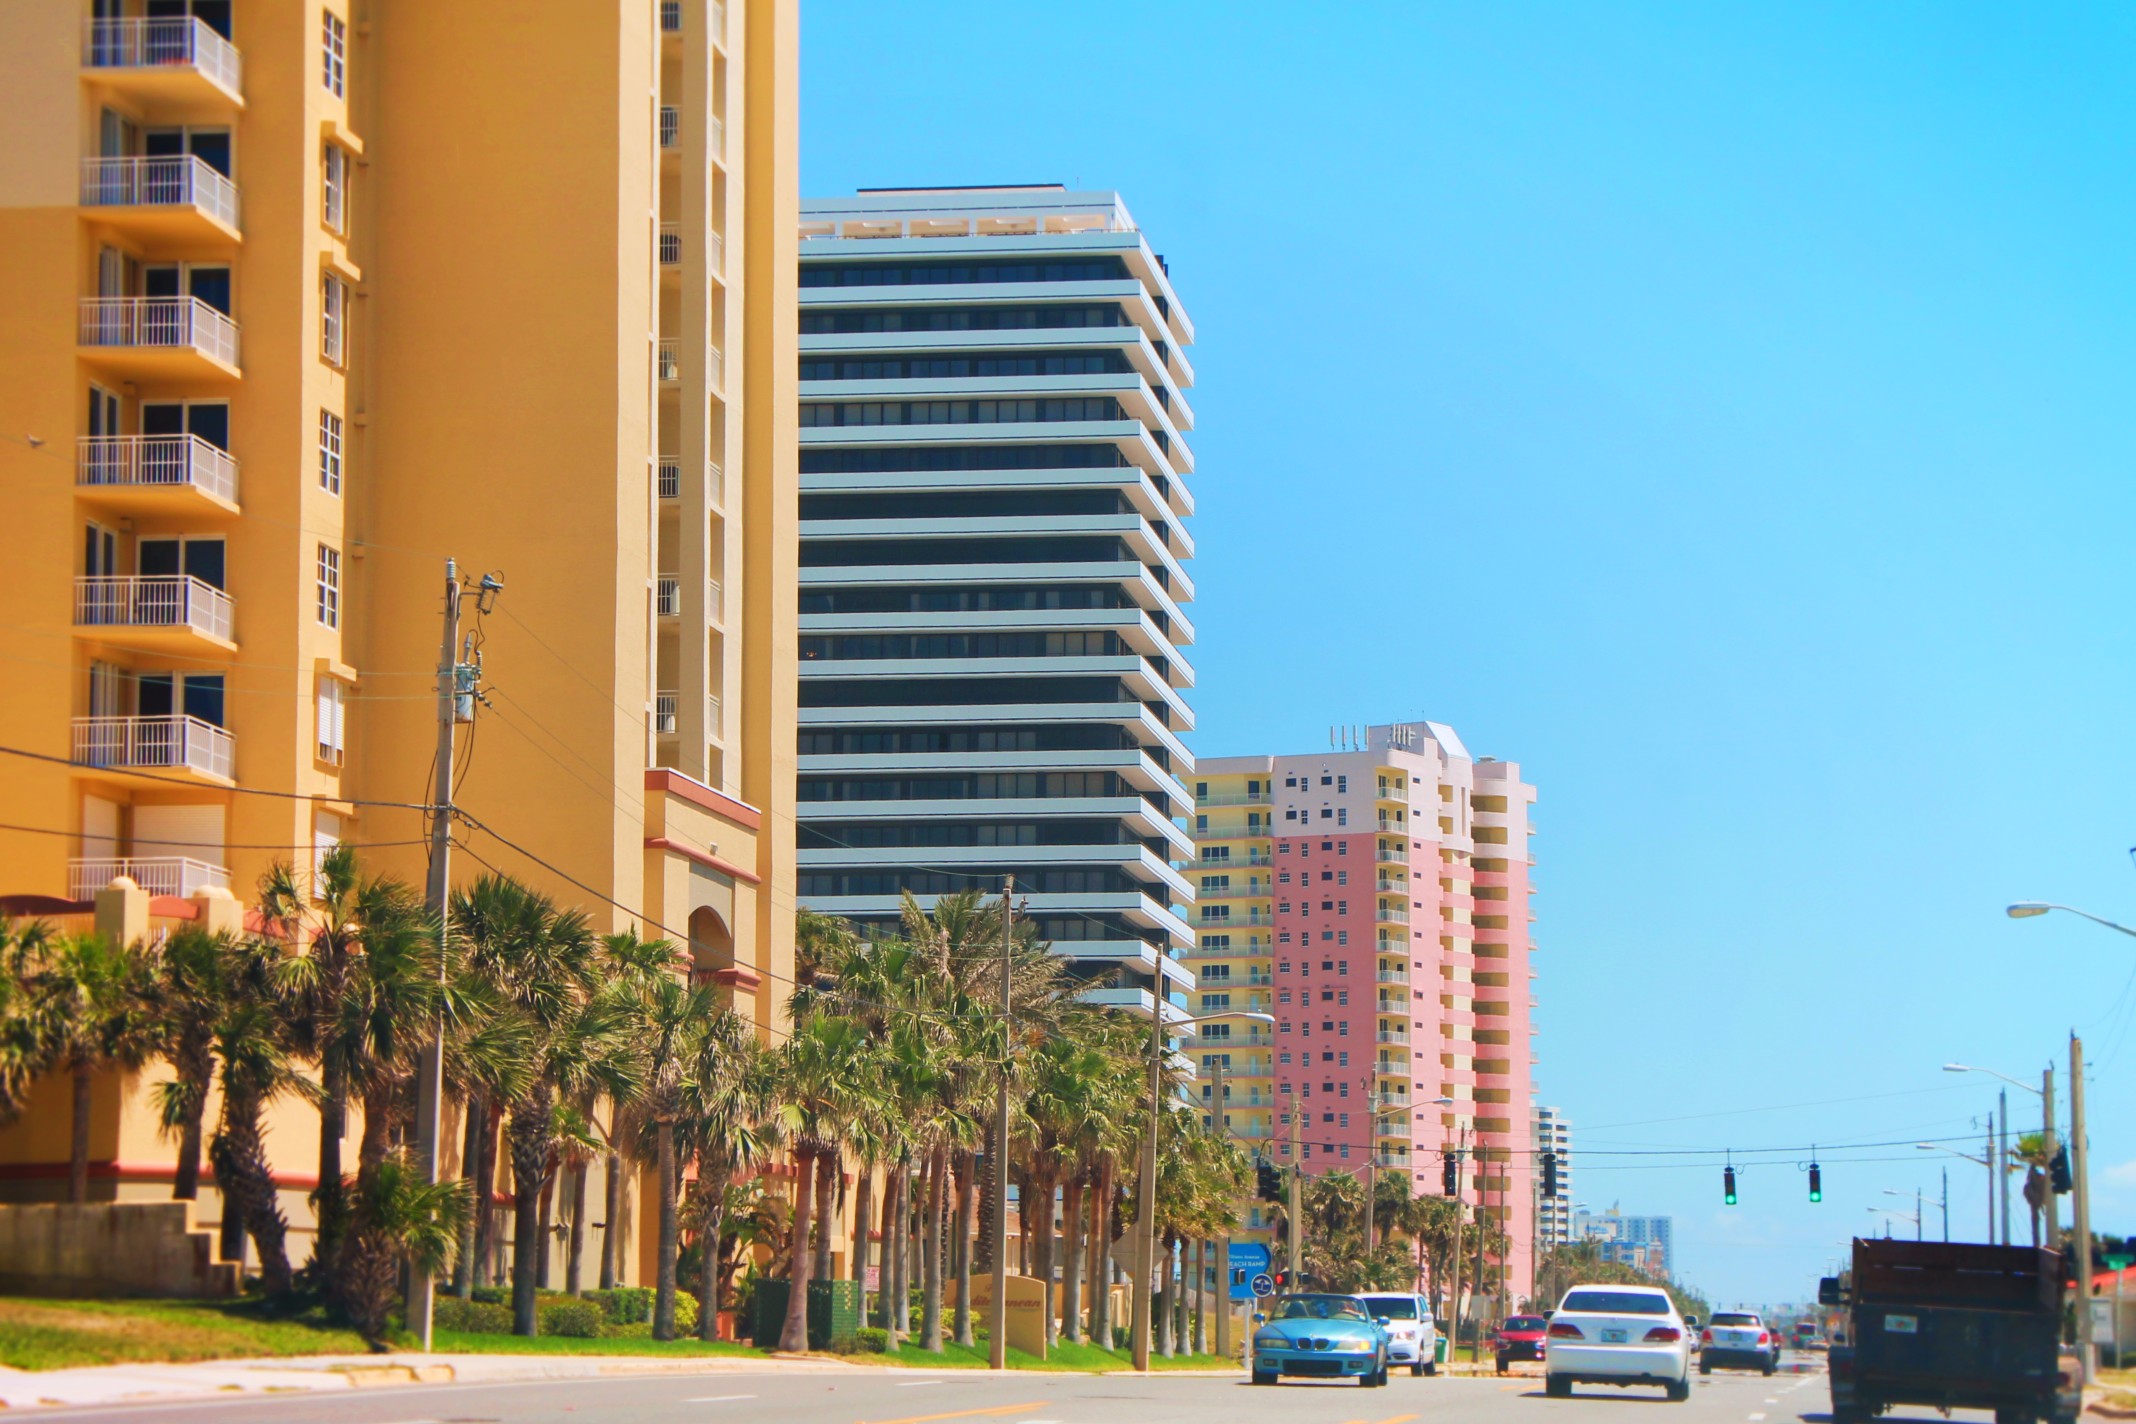 Colorful Hotels in Daytona Beach Florida 1